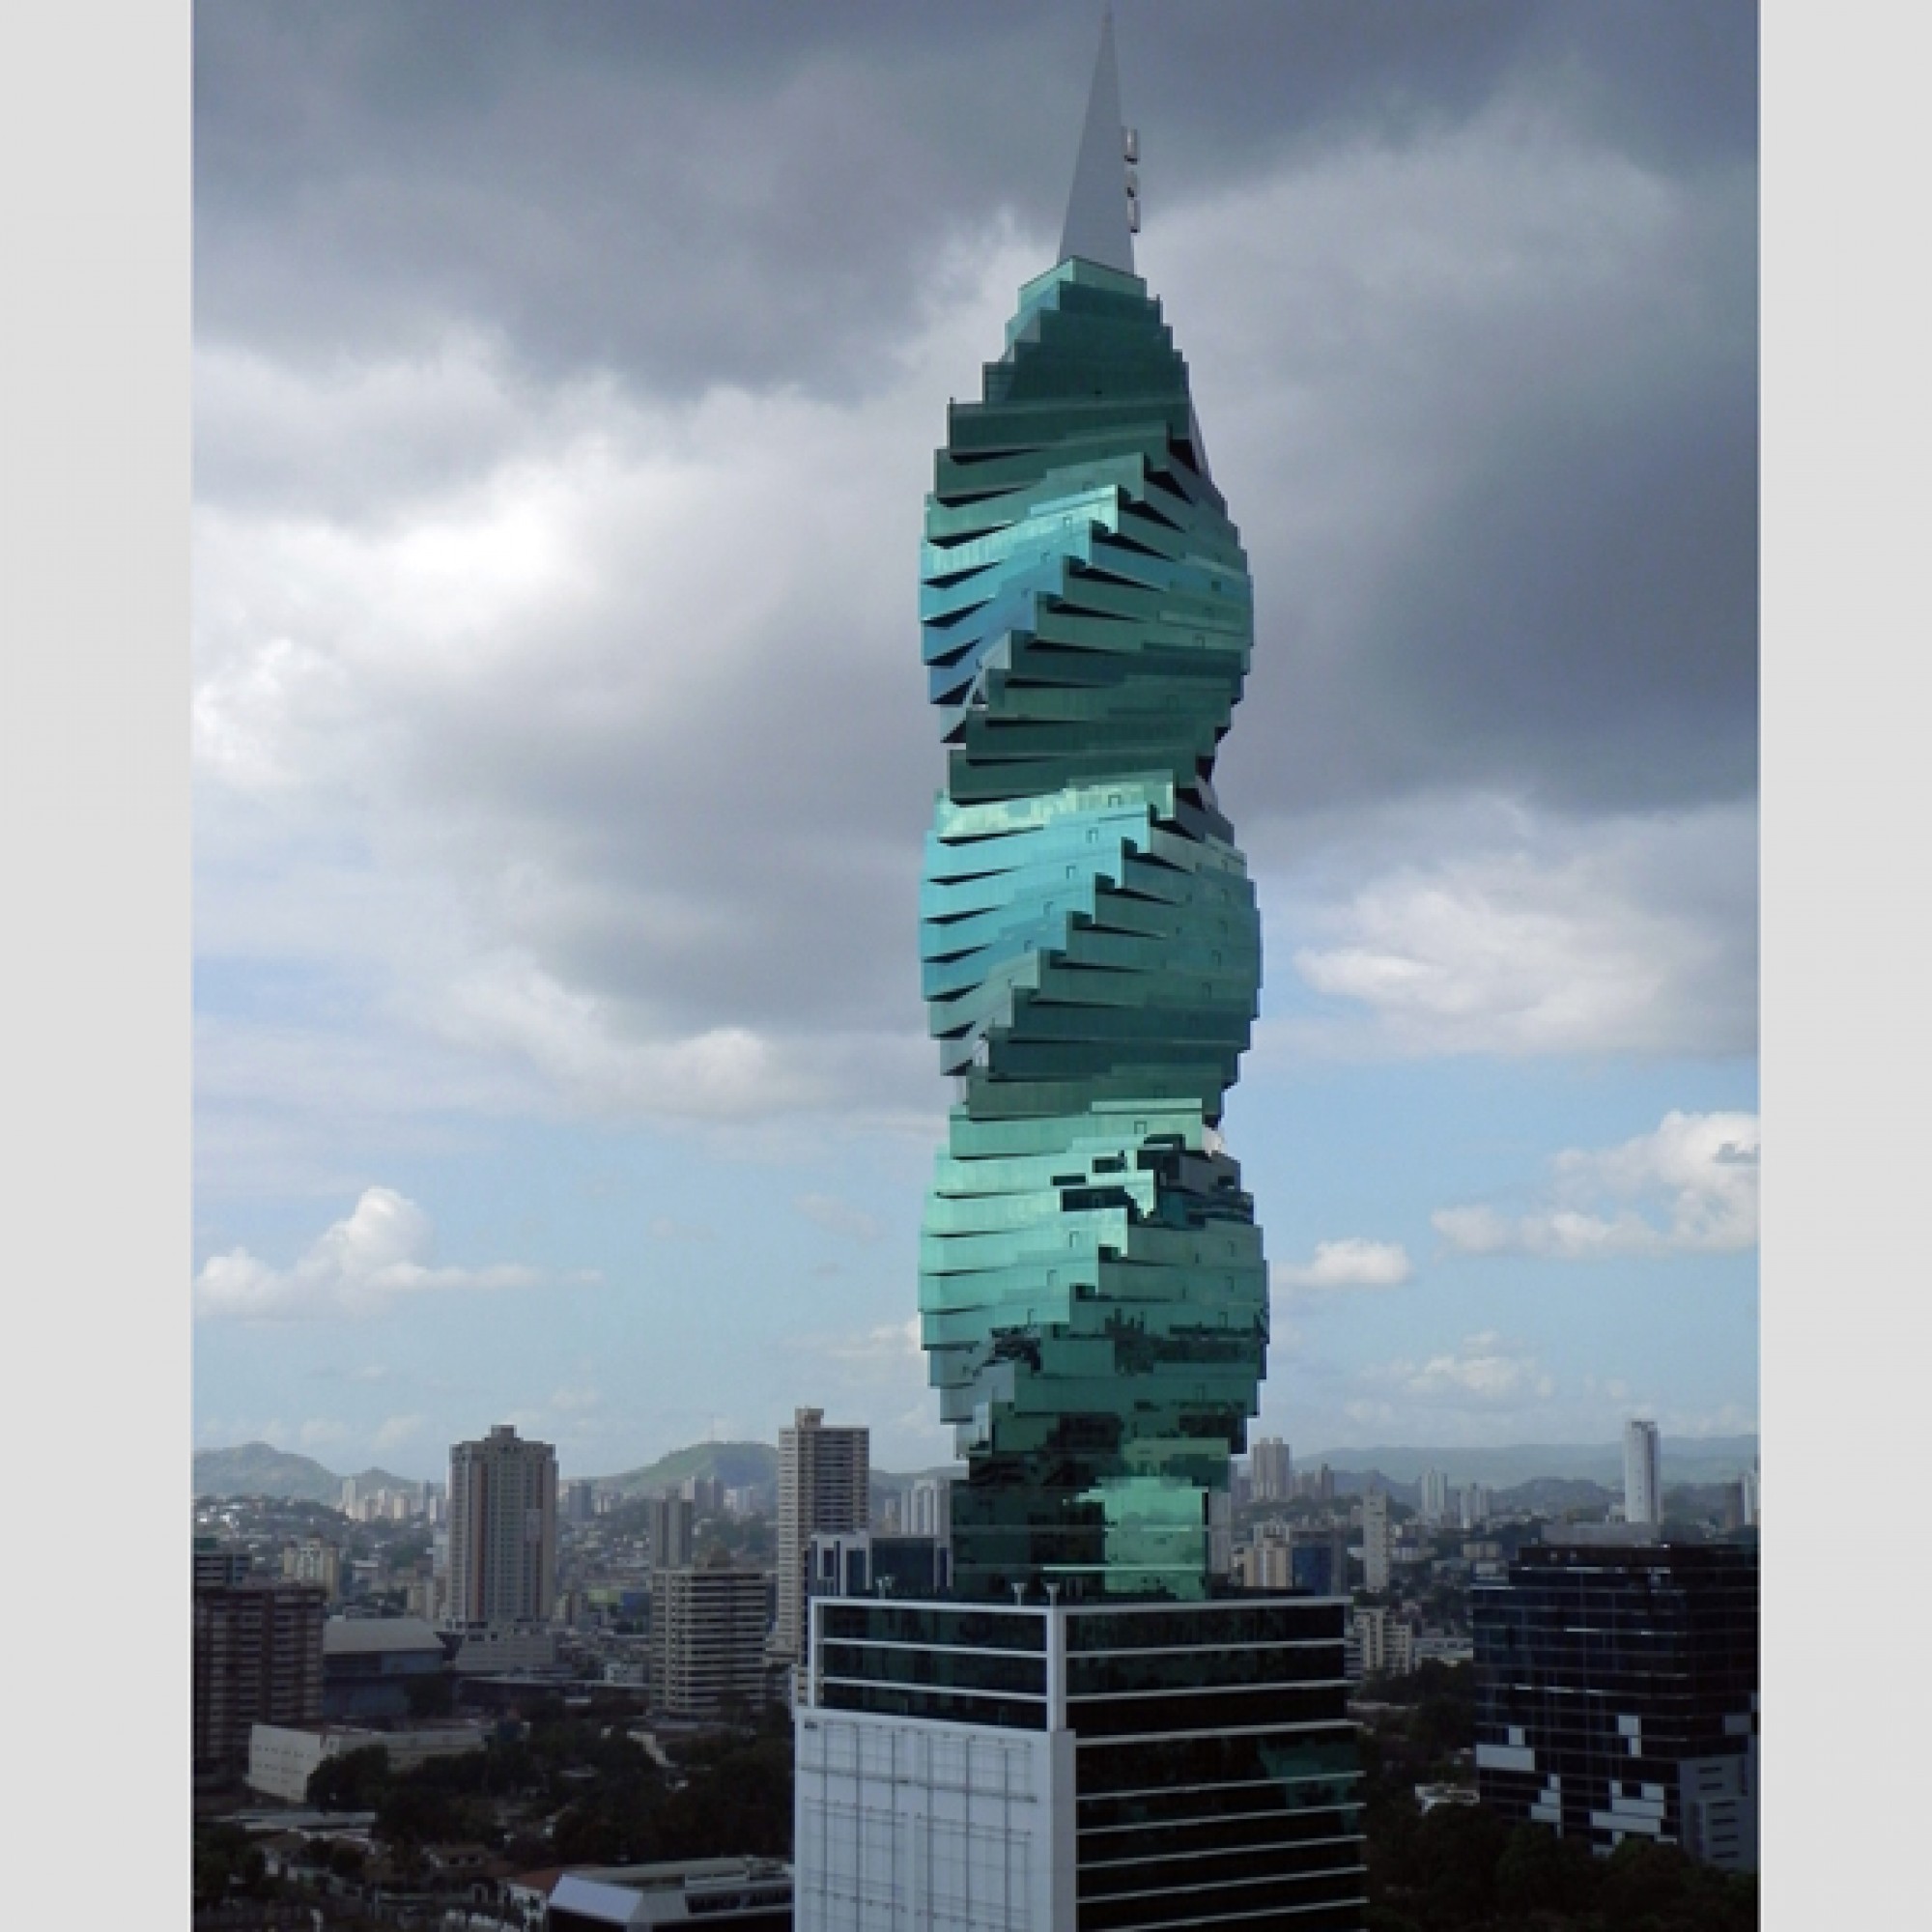  Rang 8, F & F Tower, Panama City, Panama, fertigestellt 2011,  233 Meter hoch, 53 Stockwerke, Rotation total 315 Grad, Rotation pro Etage 5.943 Grad. (Muribeg, CC BY-SA 3.0, Wikimedia) 